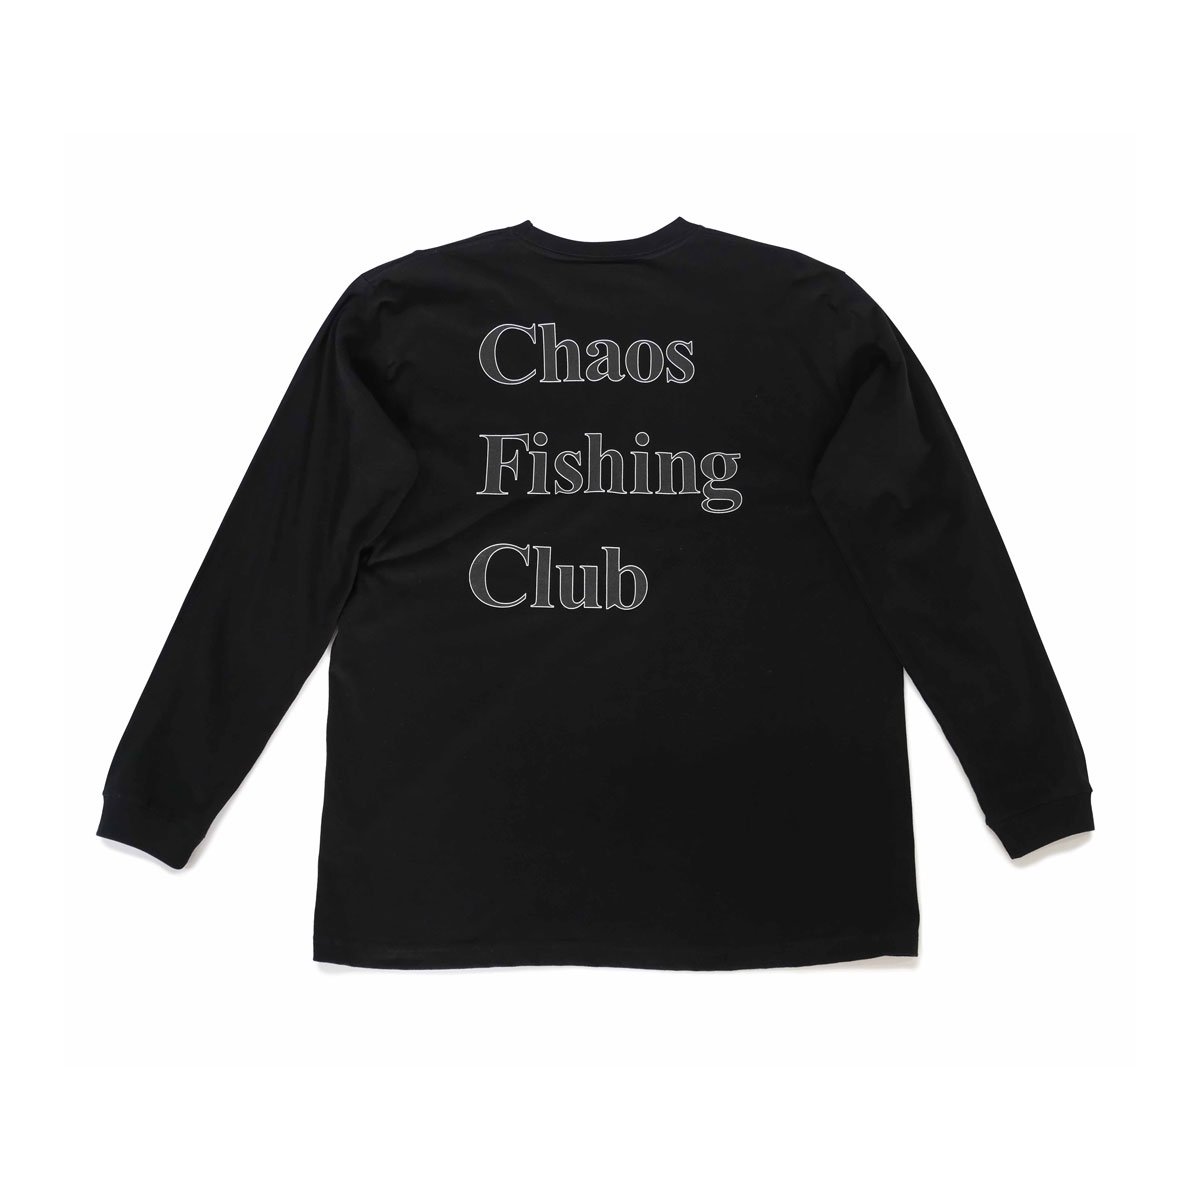 TIGHTBOOTH Chaos Fishing Club L\S BLK L 最低販売価格 5520円引き